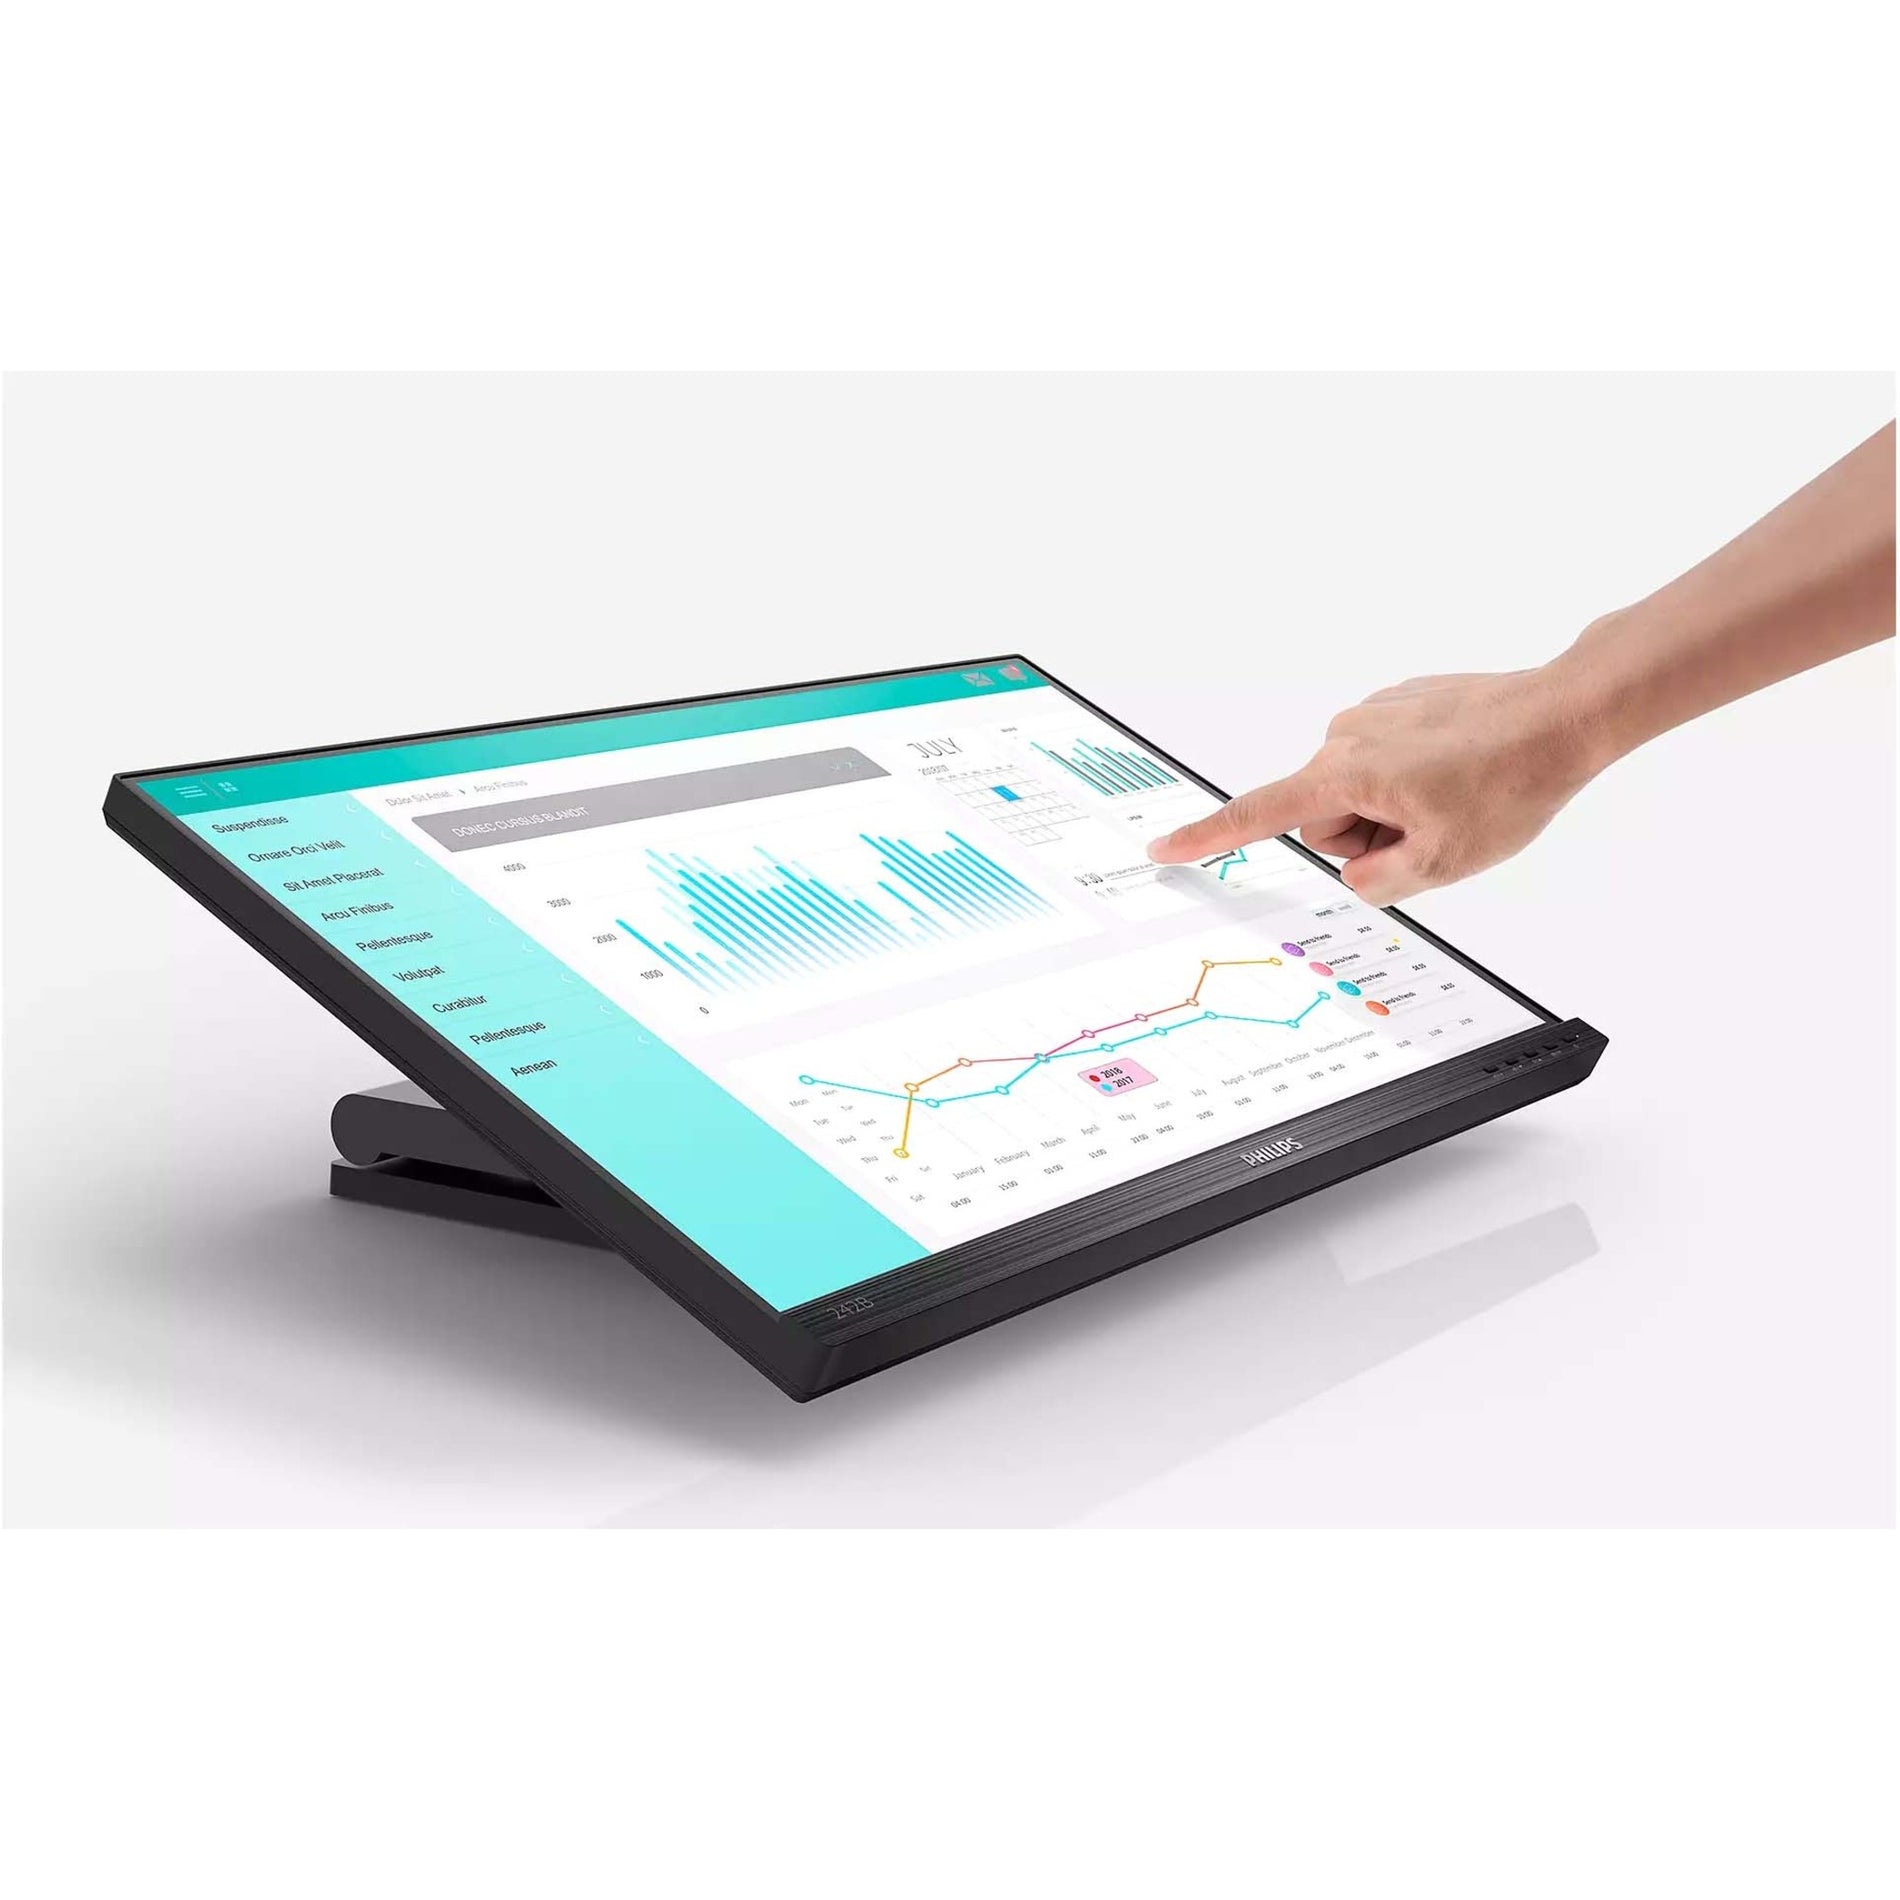 Philips 242B1TC LED Touchscreen Monitor 23.8", Full HD, 4ms GTG, 250 Nit Brightness, 16.7 Million Colors